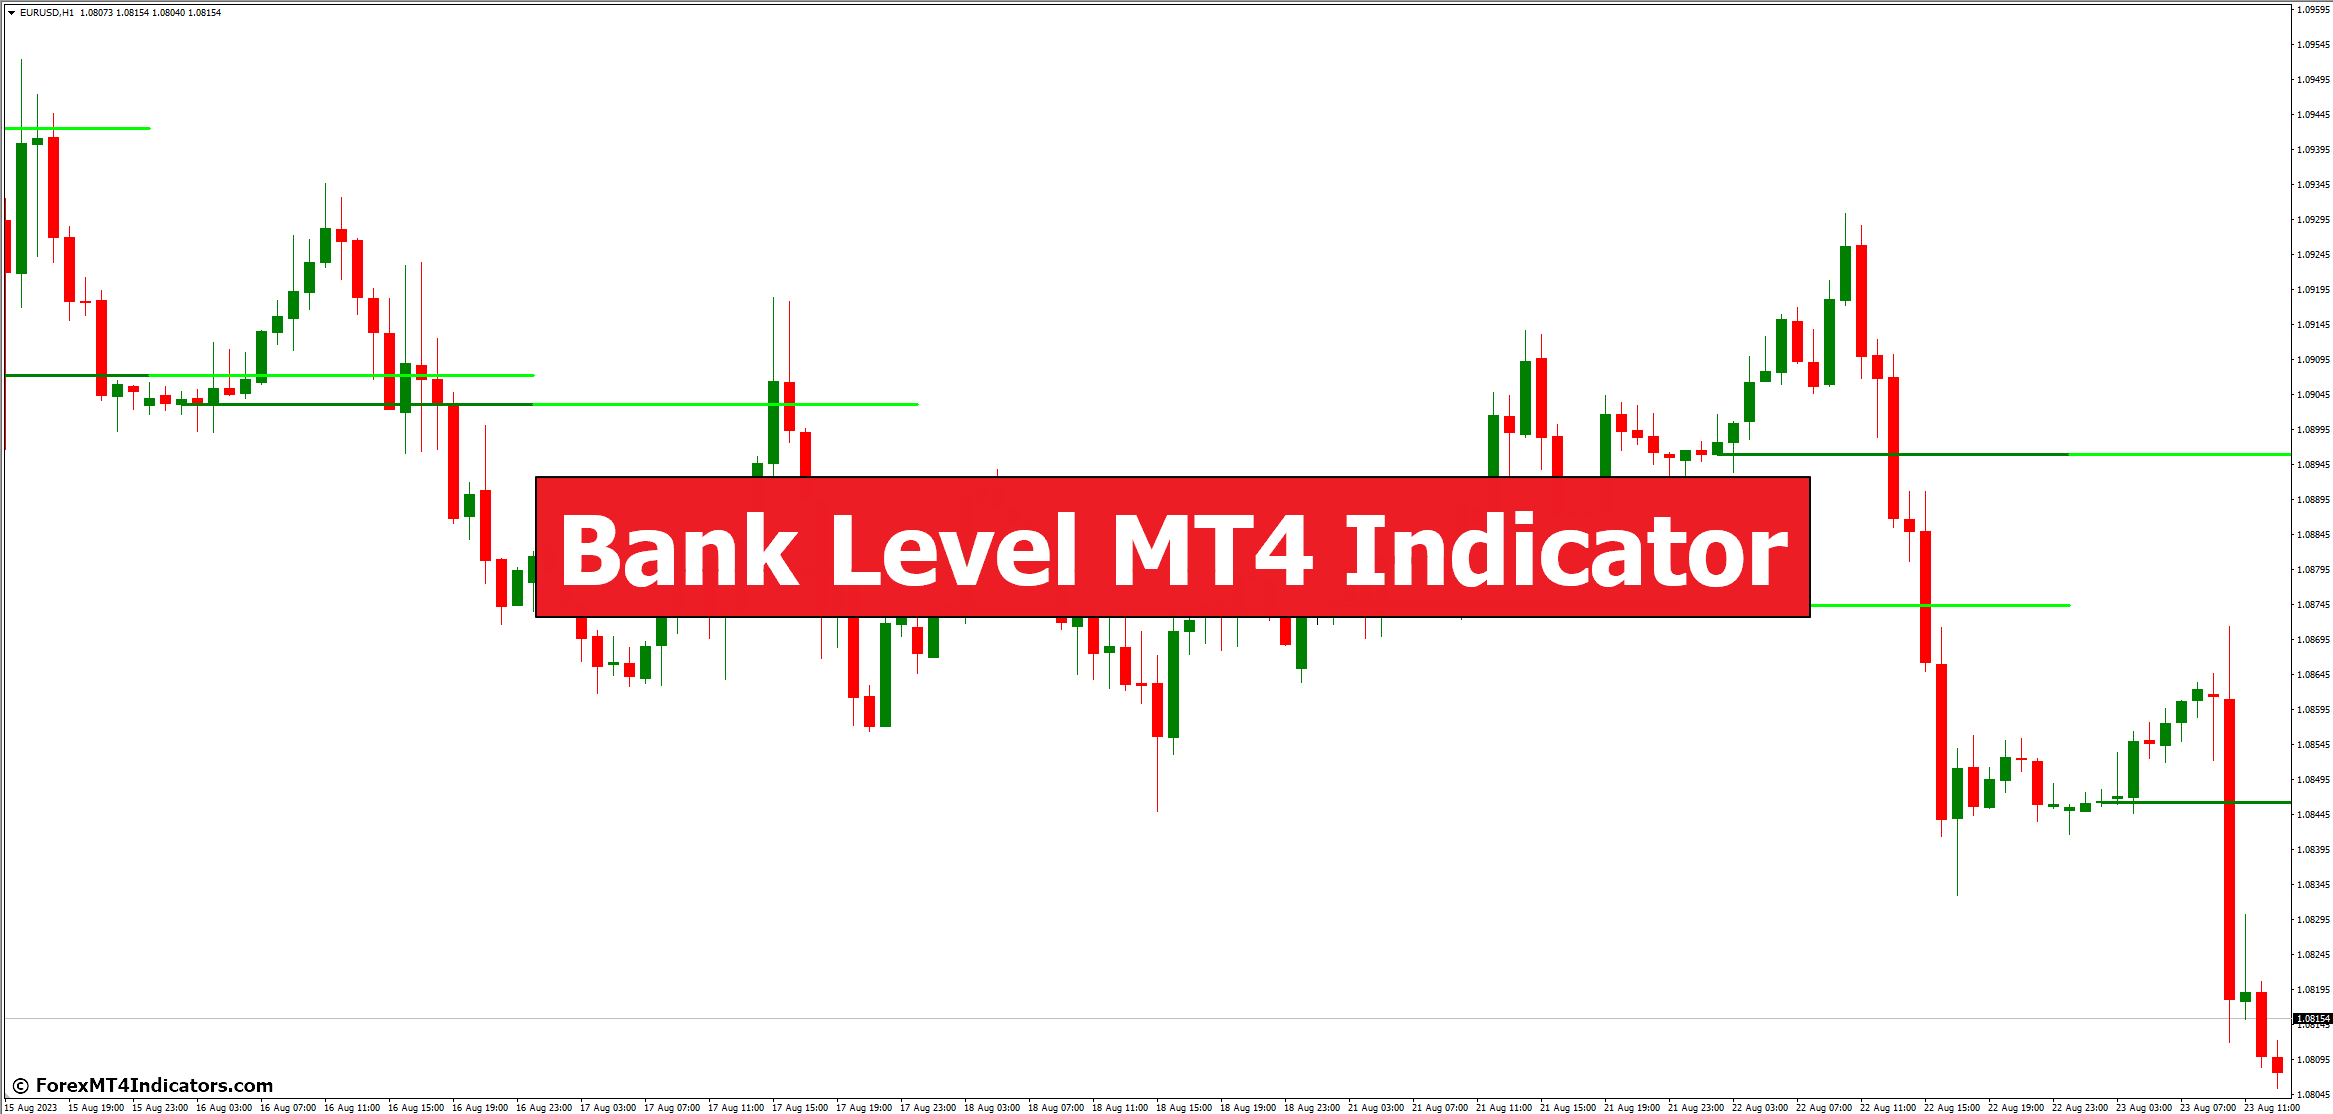 Bank Level MT4 Indicator